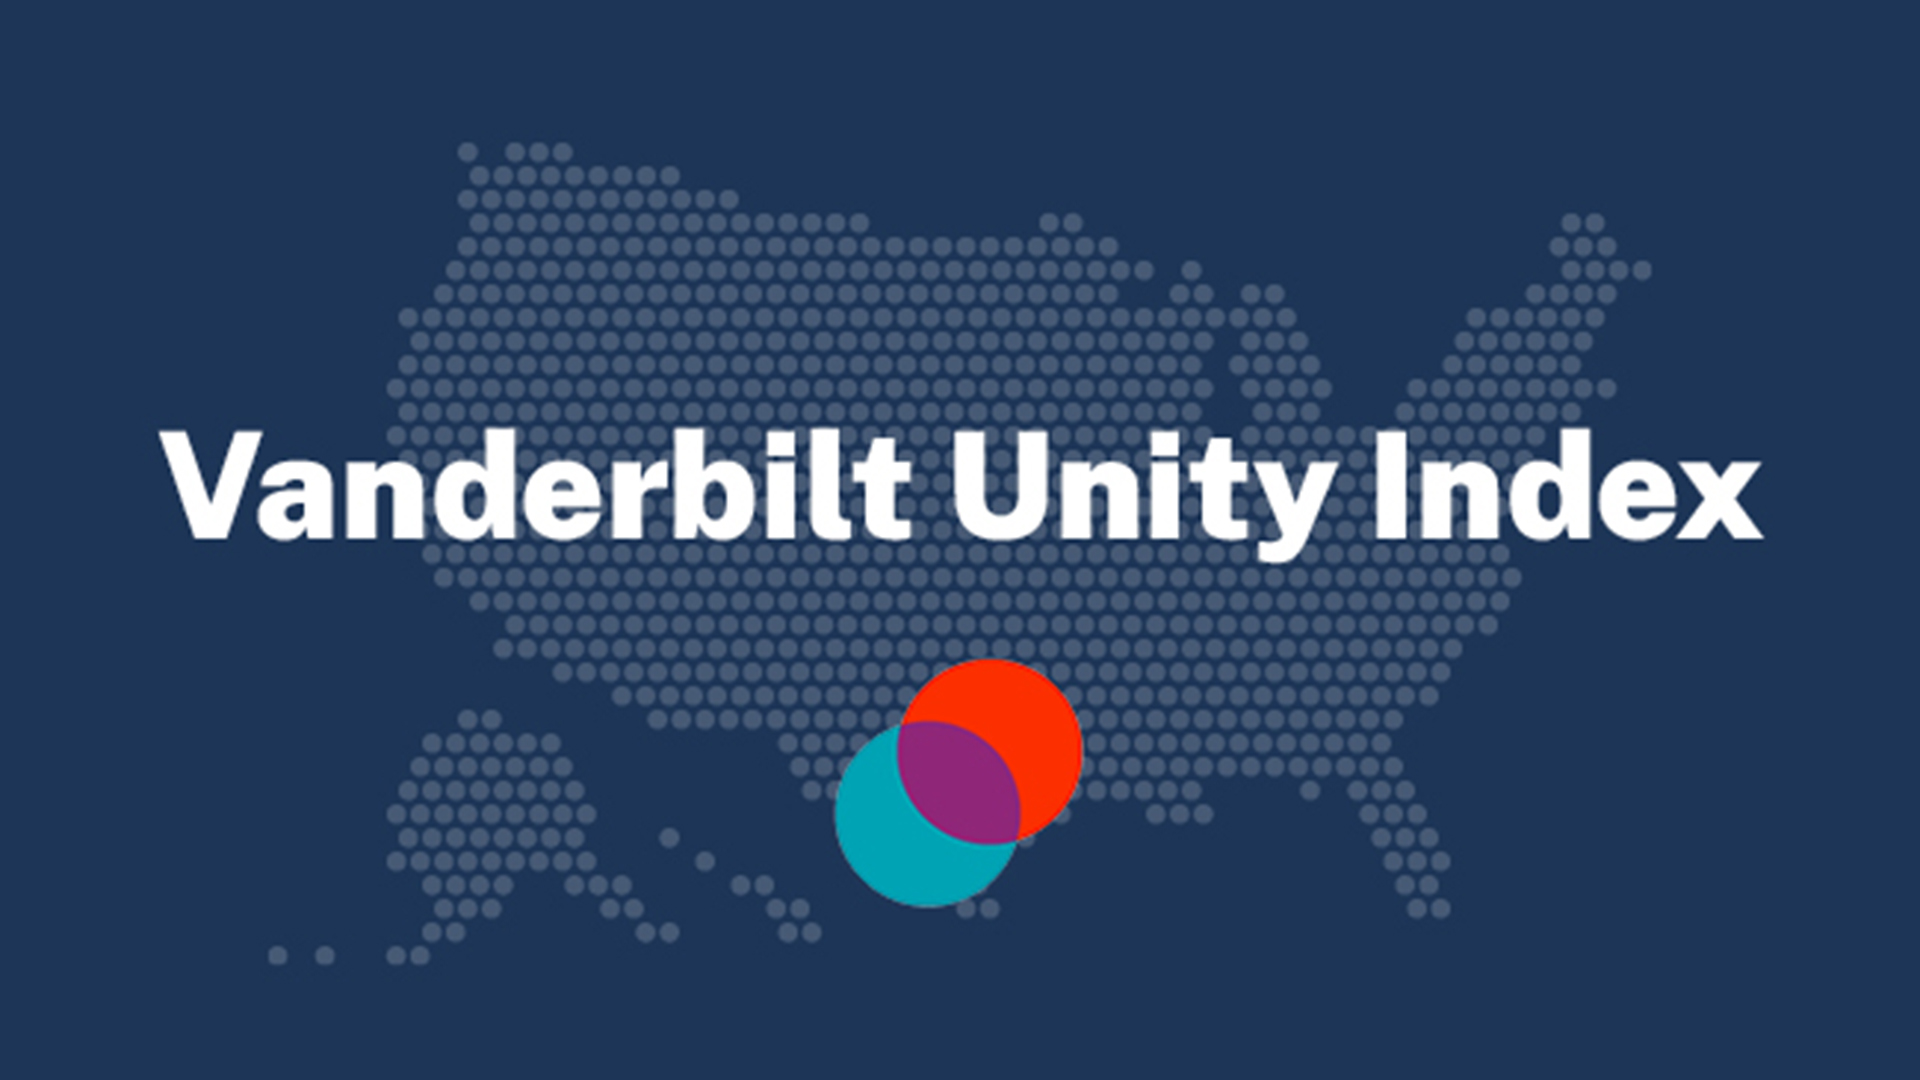 Latest Vanderbilt Unity Index shows the U.S. continuing its trend toward increased political polarization